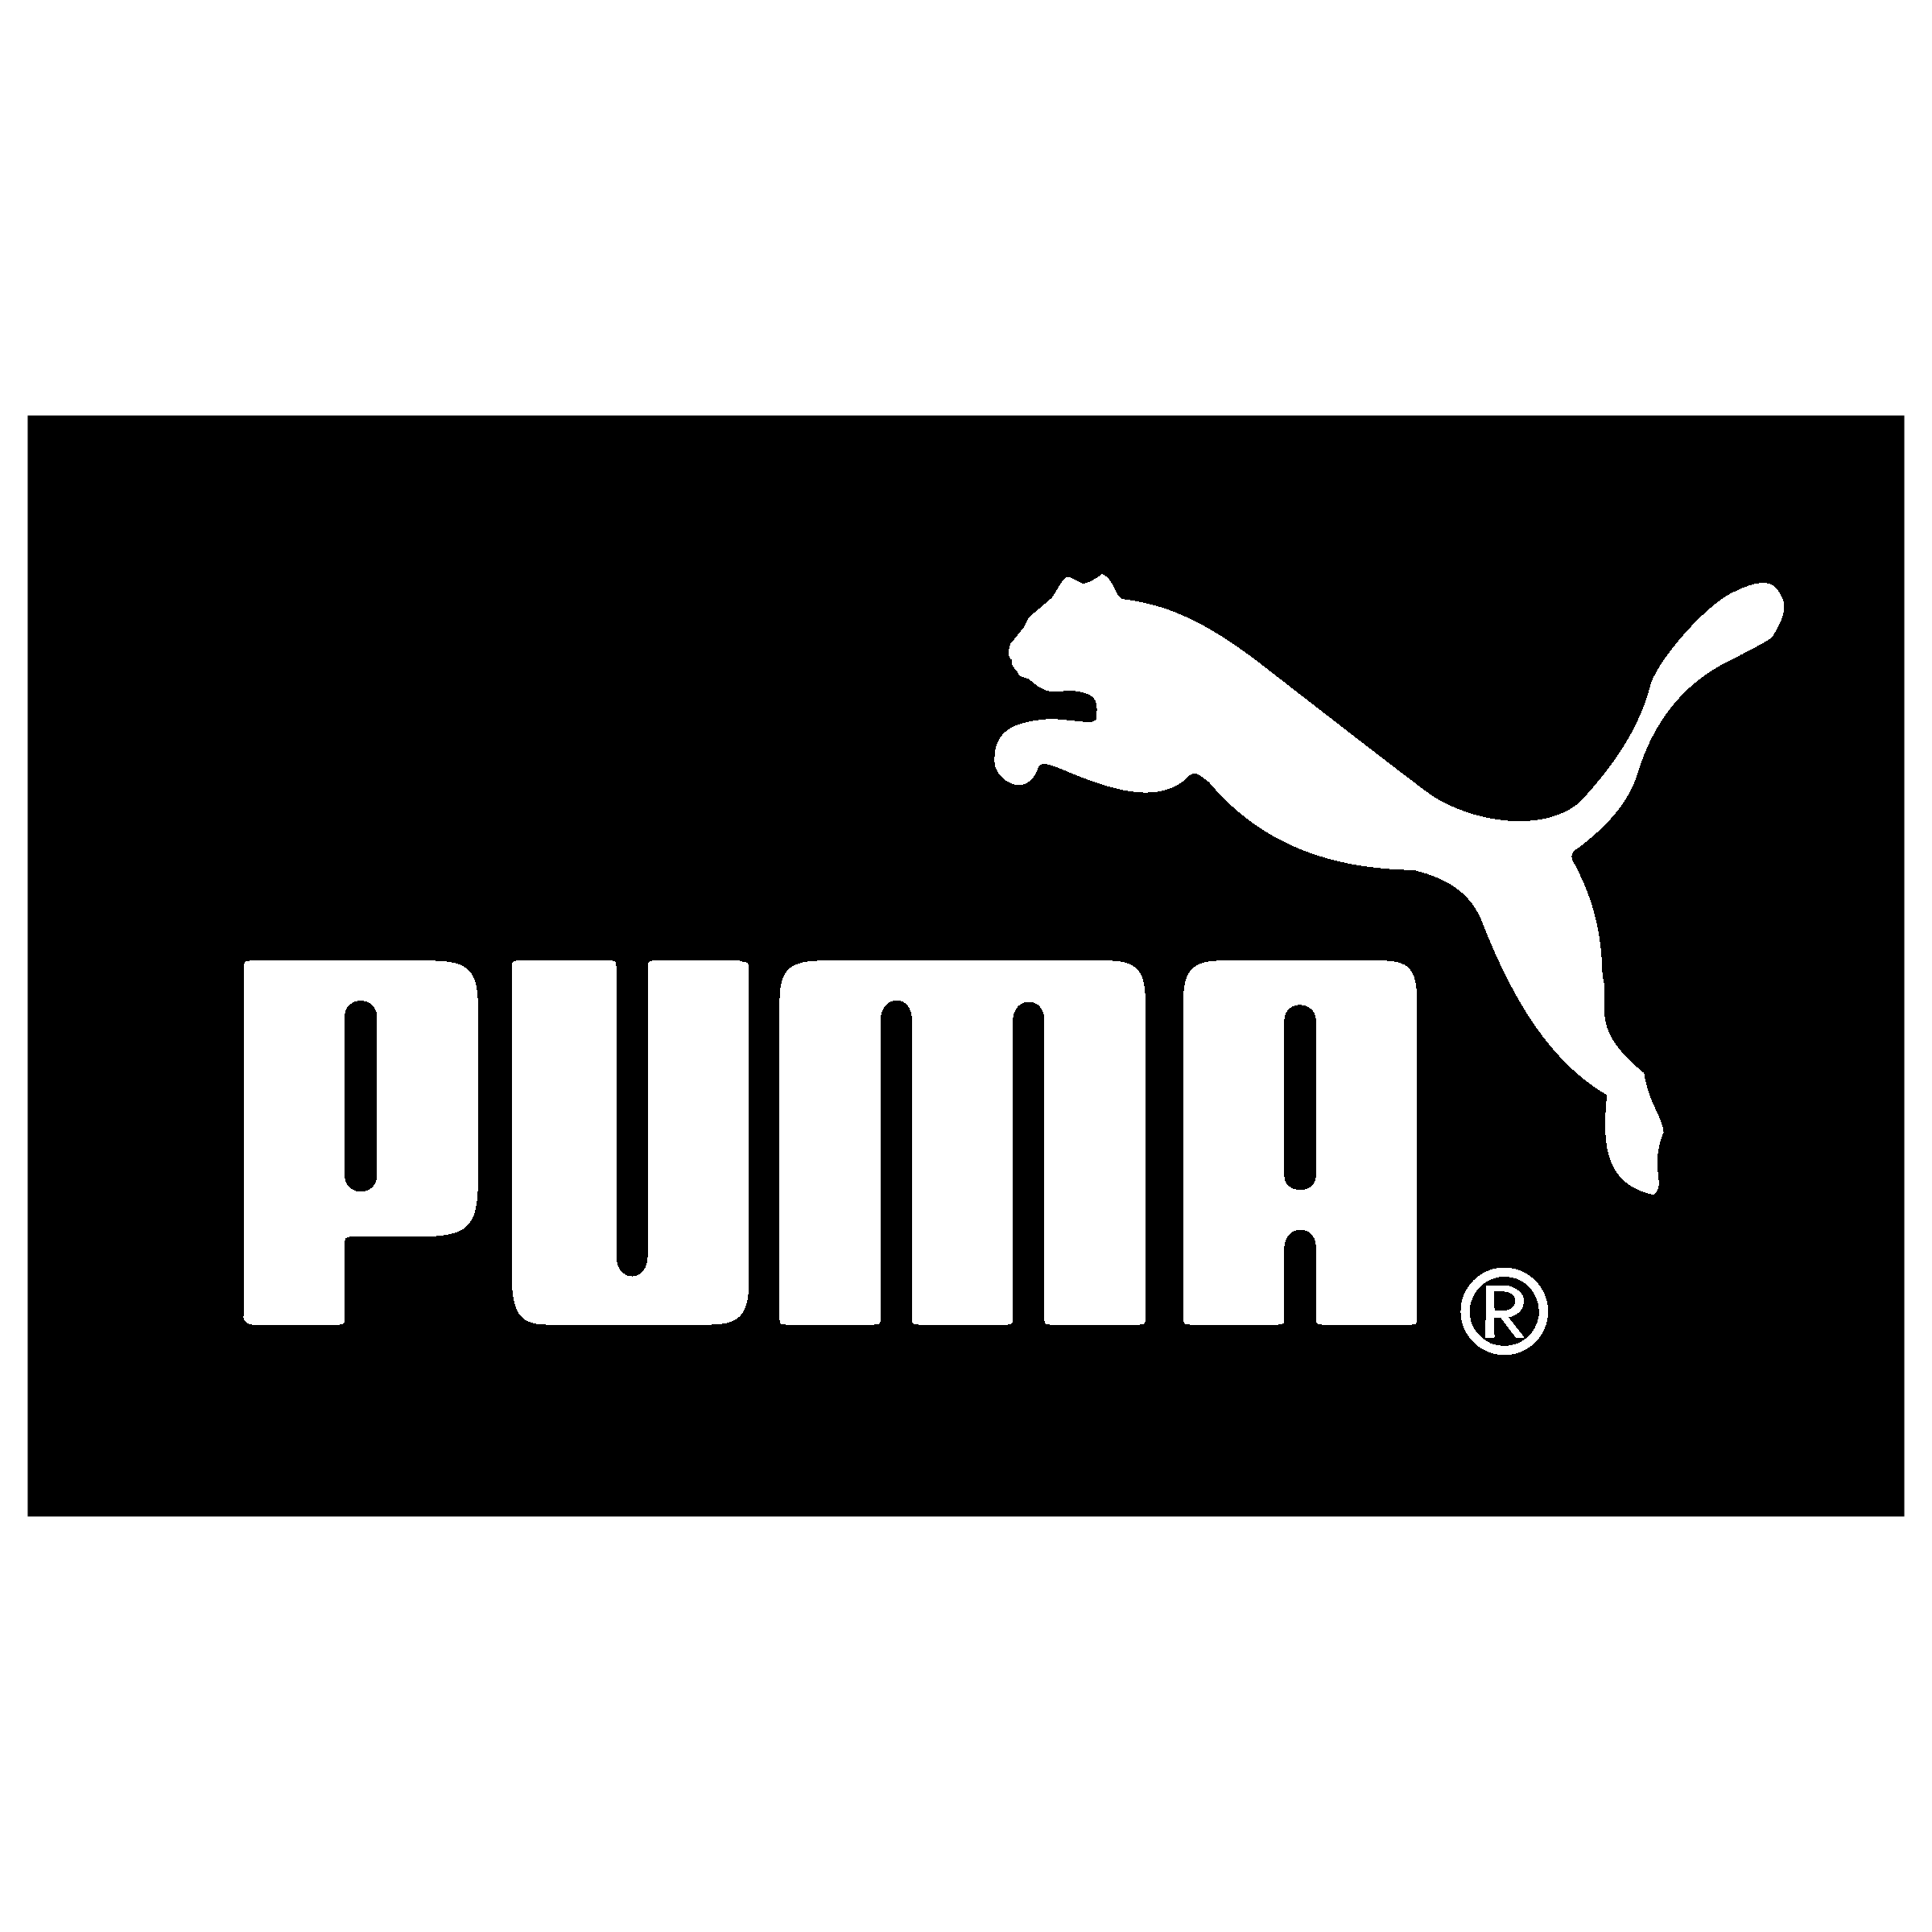 puma-2-logo-black-and-white.png